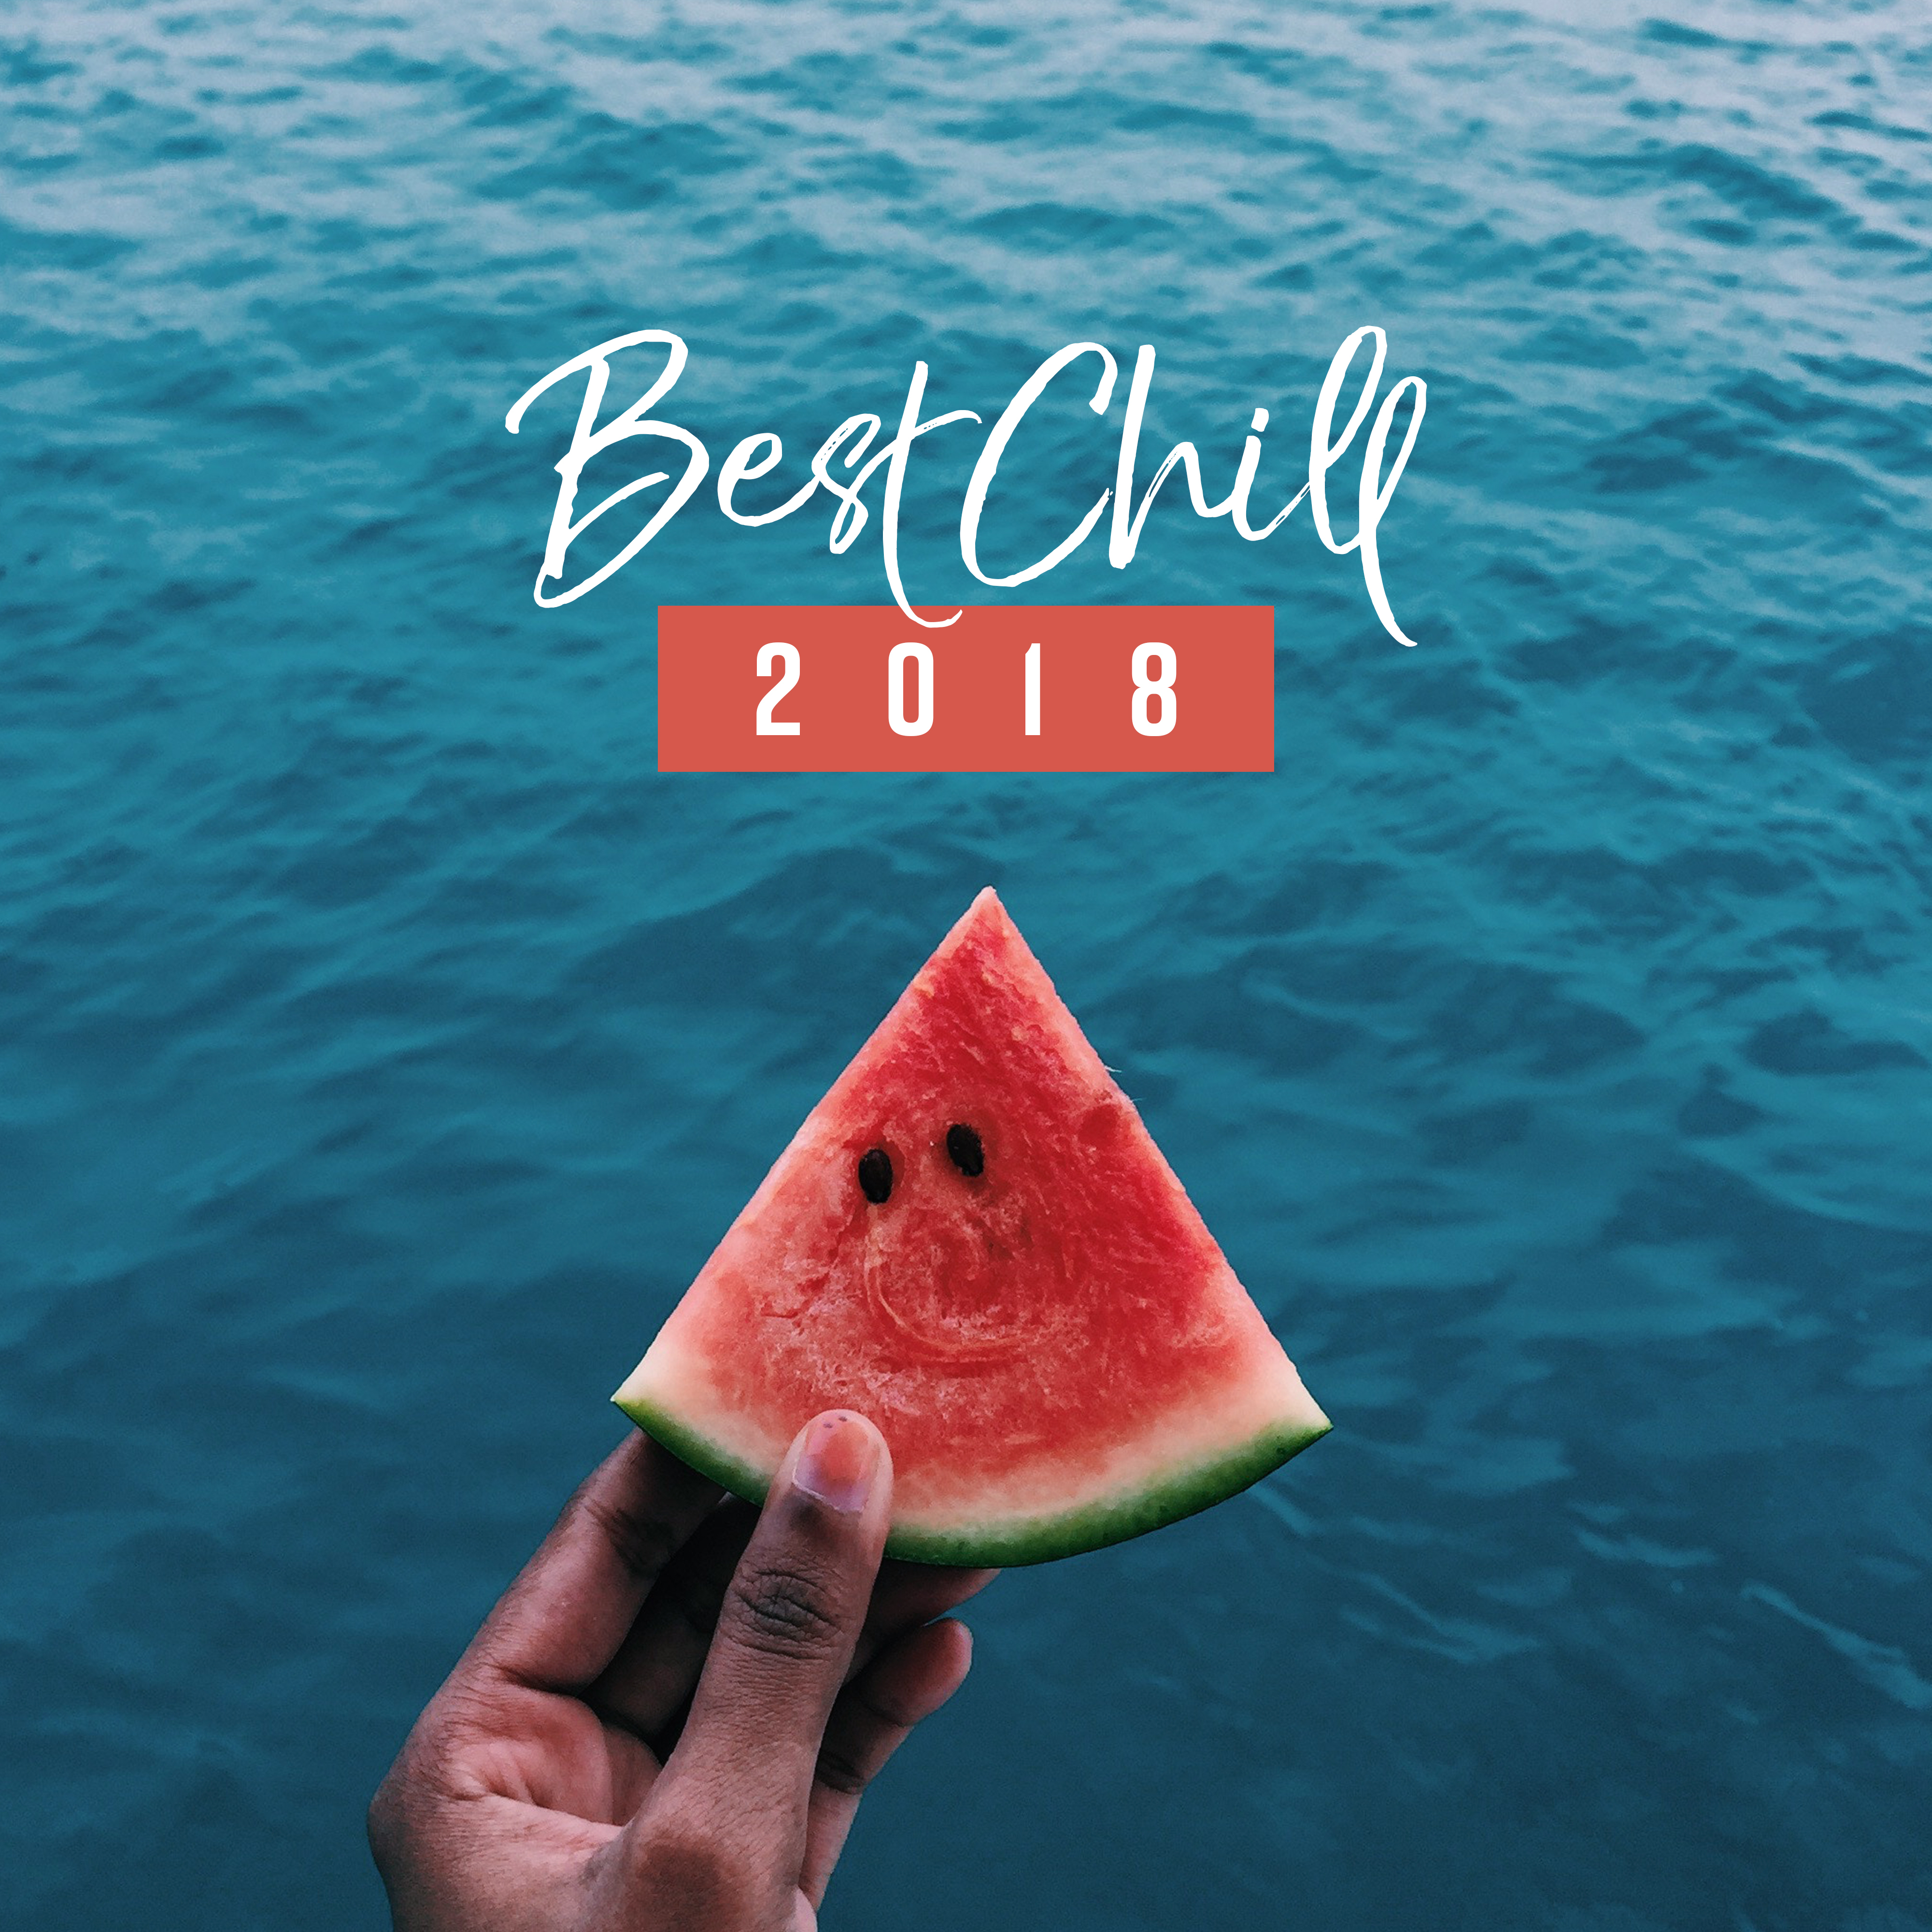 Best Chill 2018